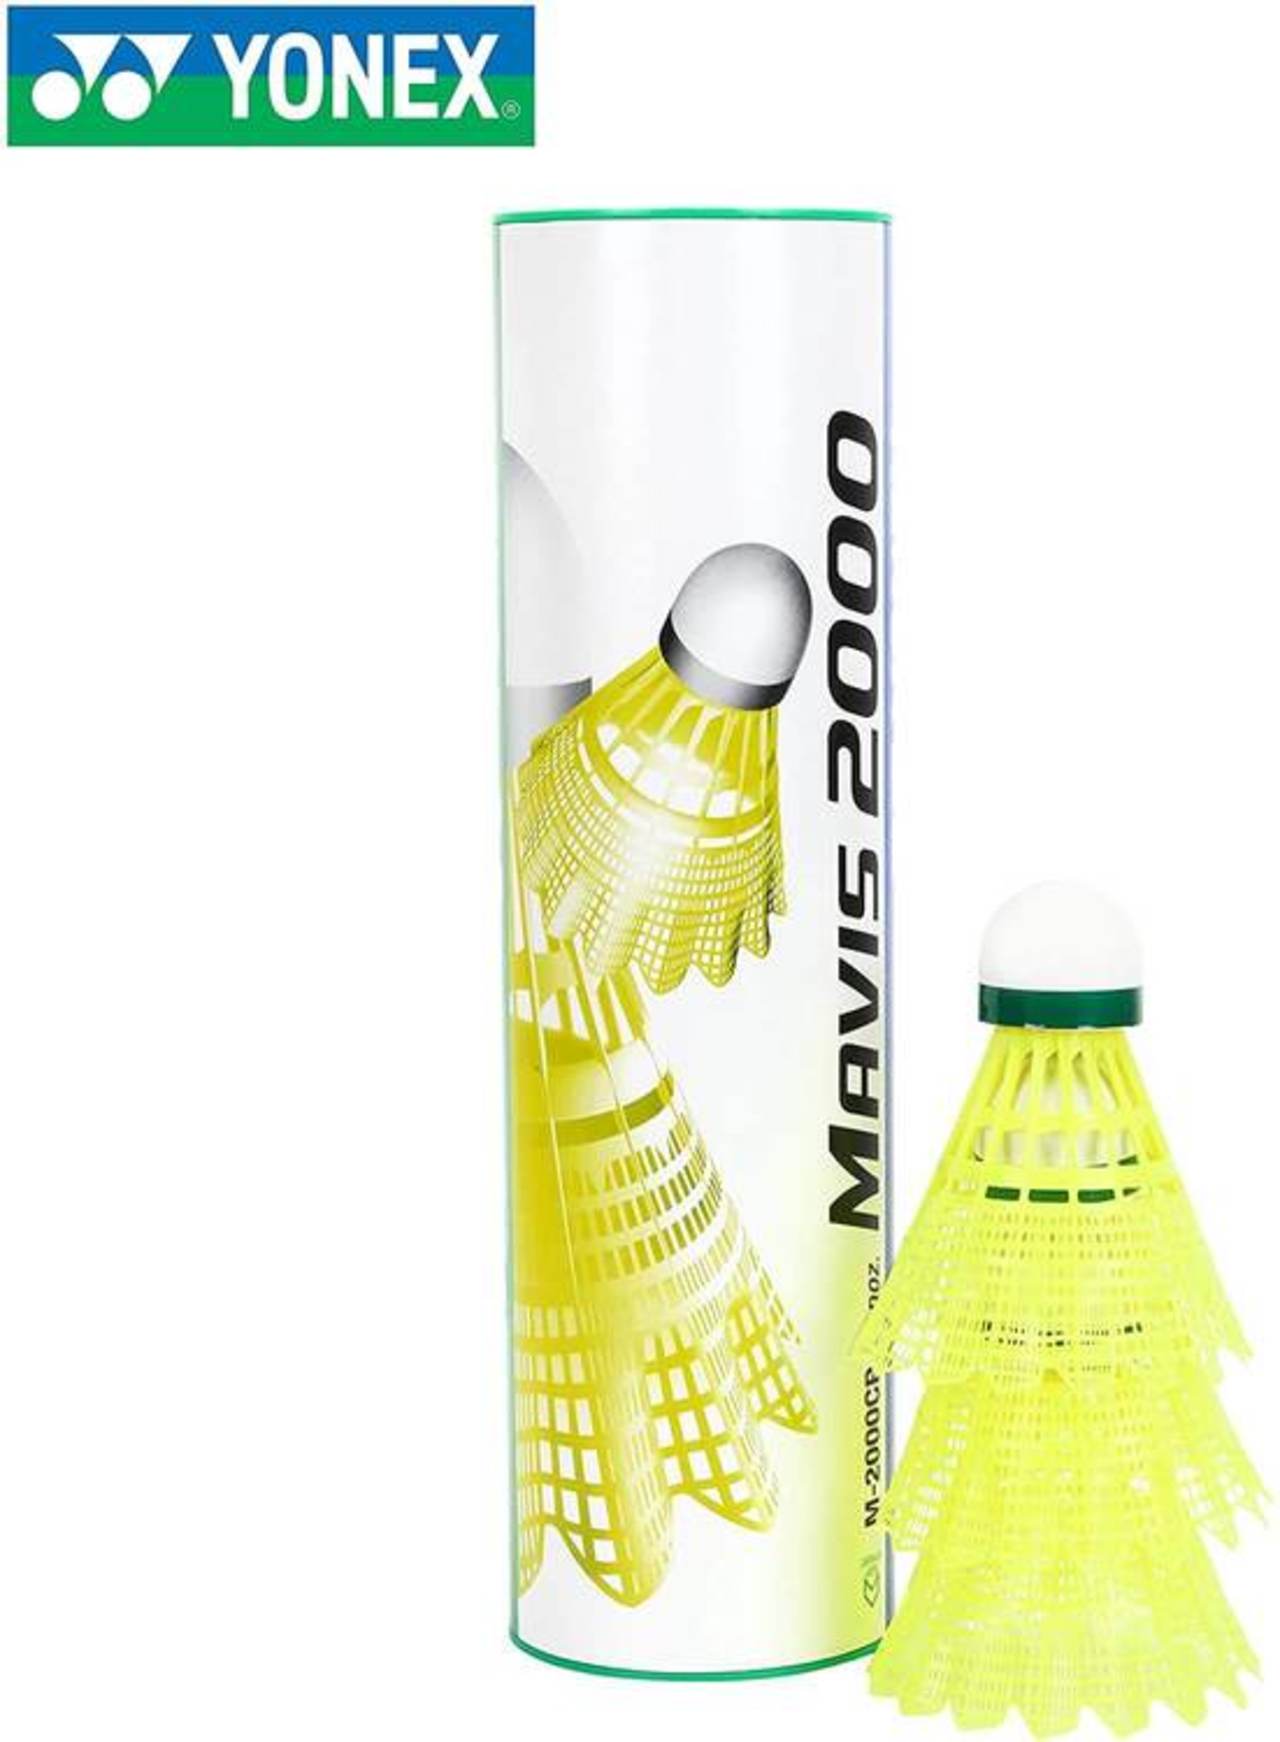 Yellow Yonex Mavis 2000 Medium Speed Badminton Shuttlecocks Birdies Pack of 6 